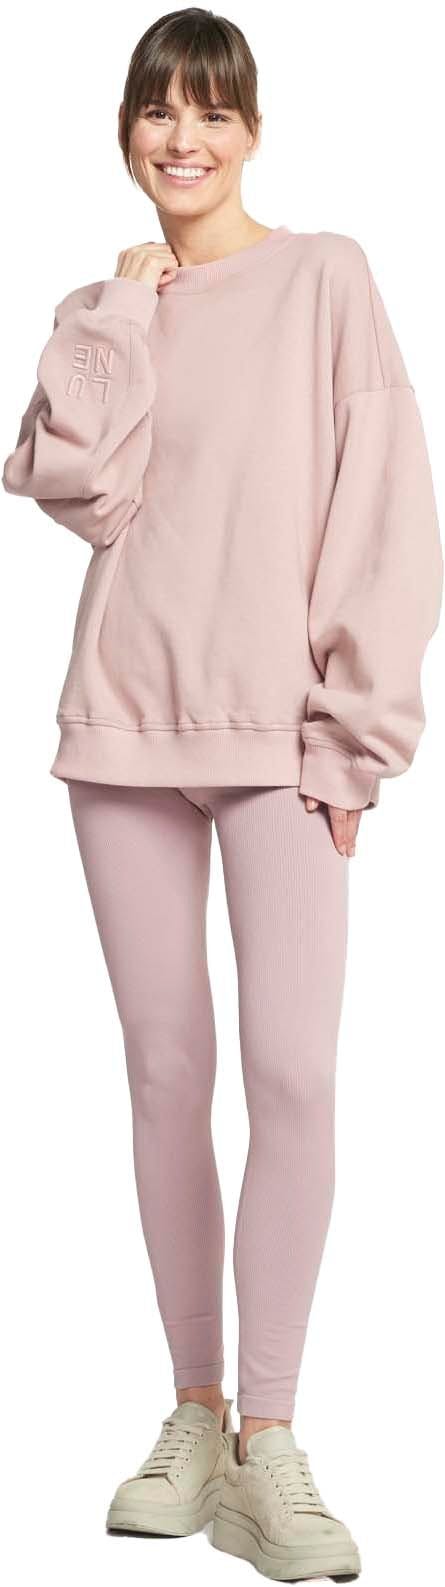 Product image for Zane Oversized Sweater - Women's